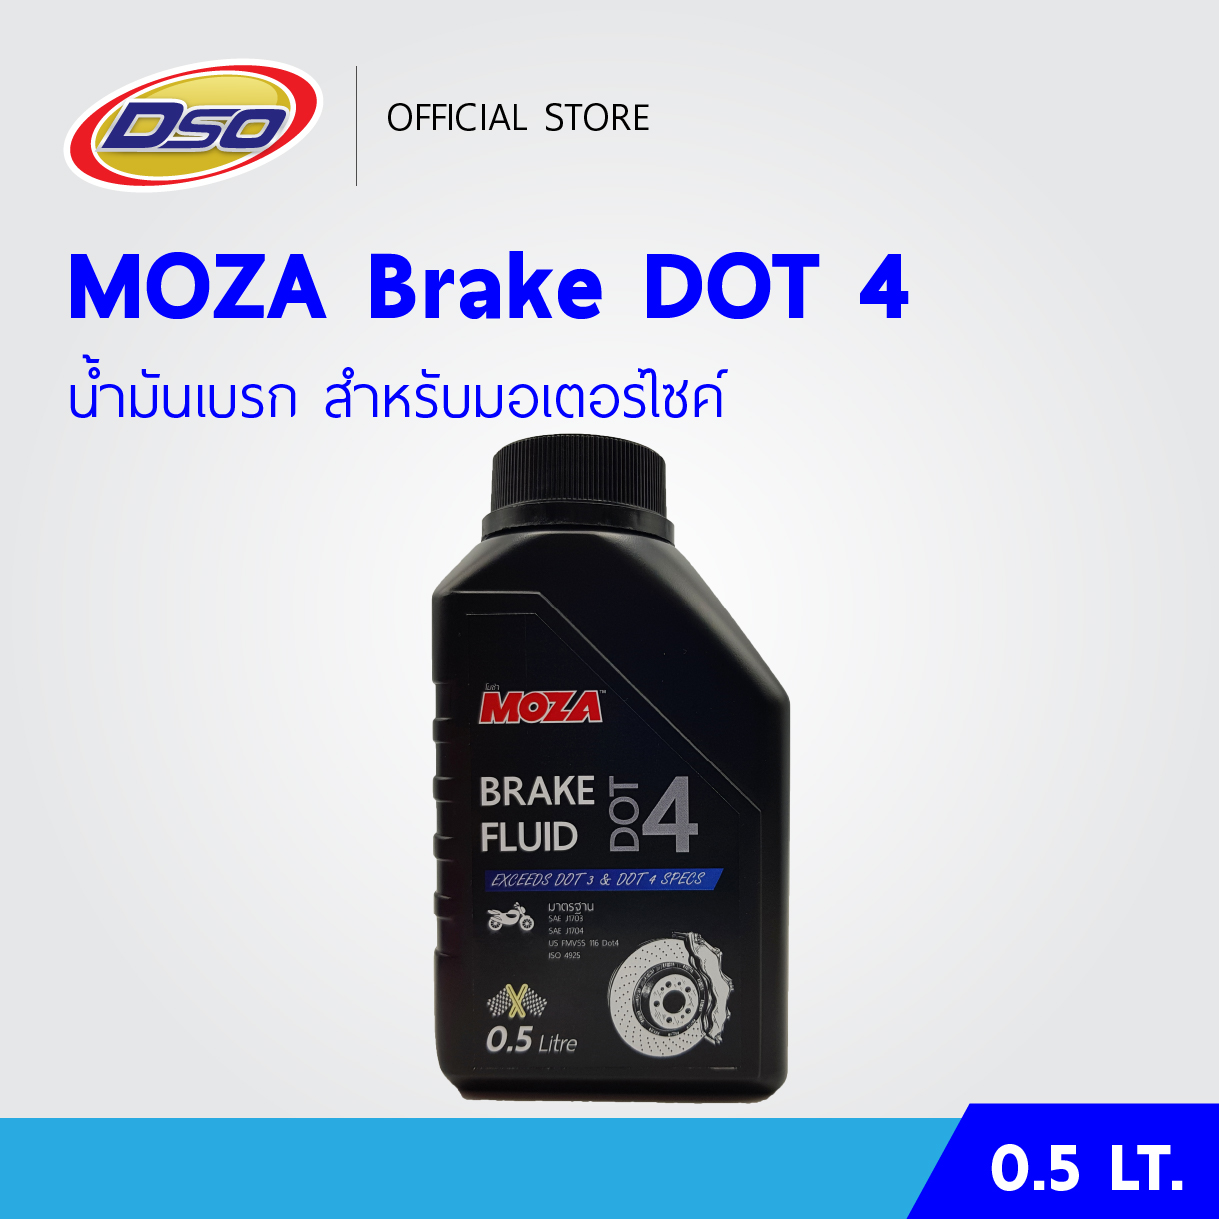 MOZA น้ำมันเบรคมอเตอร์ไซค์ DOT4 0.5ลิตร / Brake Fluid Dot 4 0.5LT.